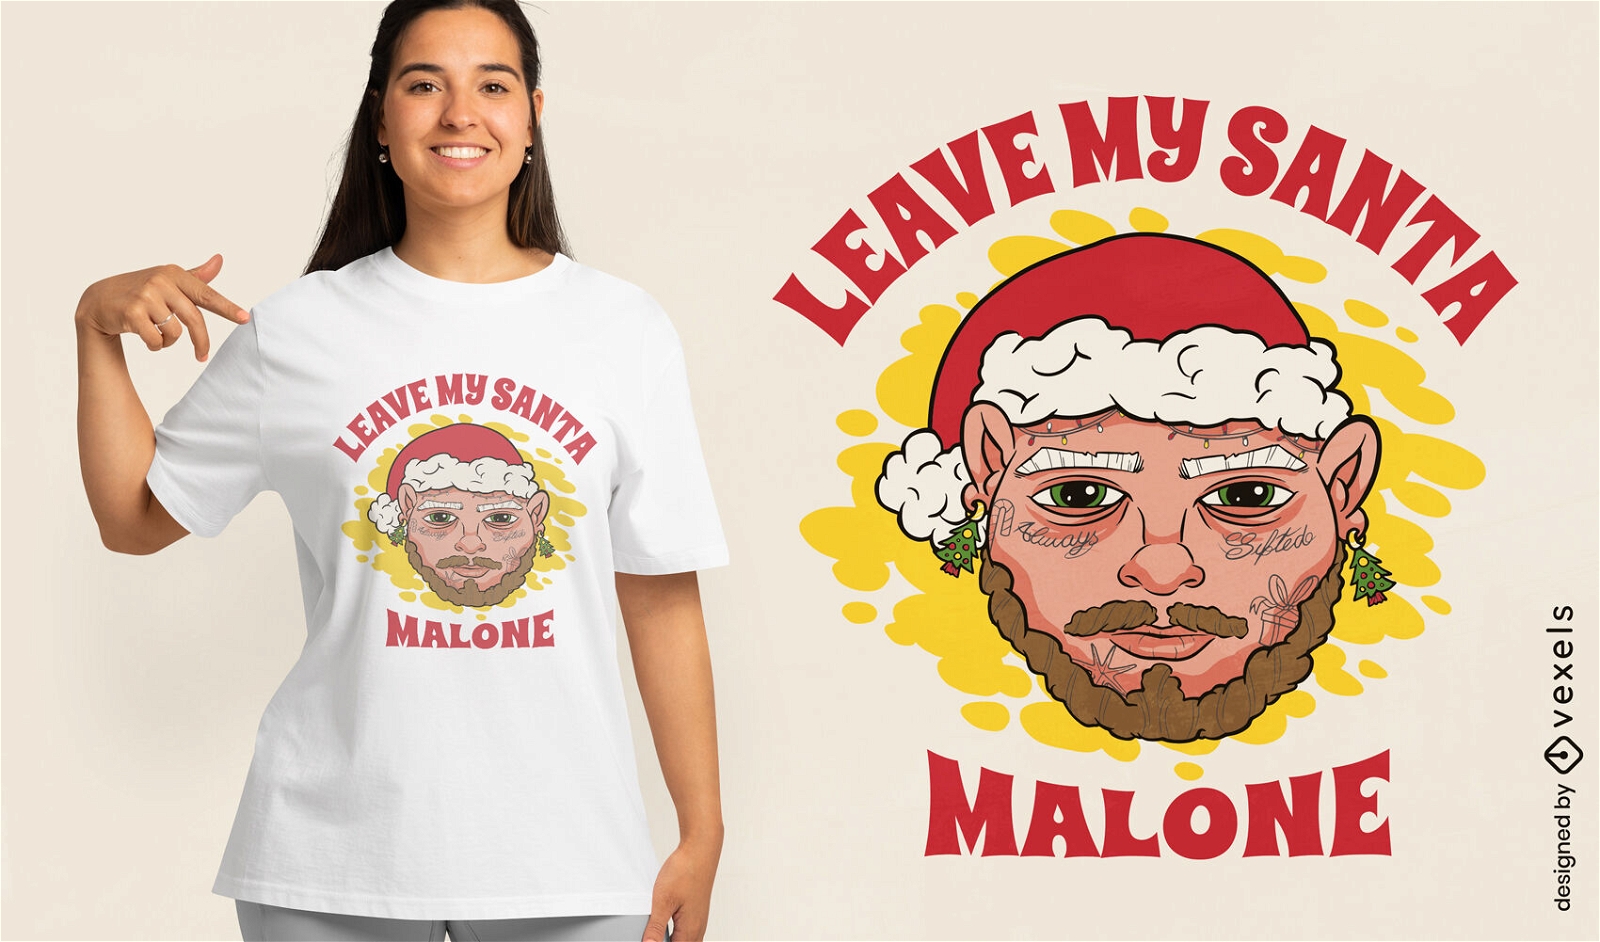 Santa claus character parody t-shirt design